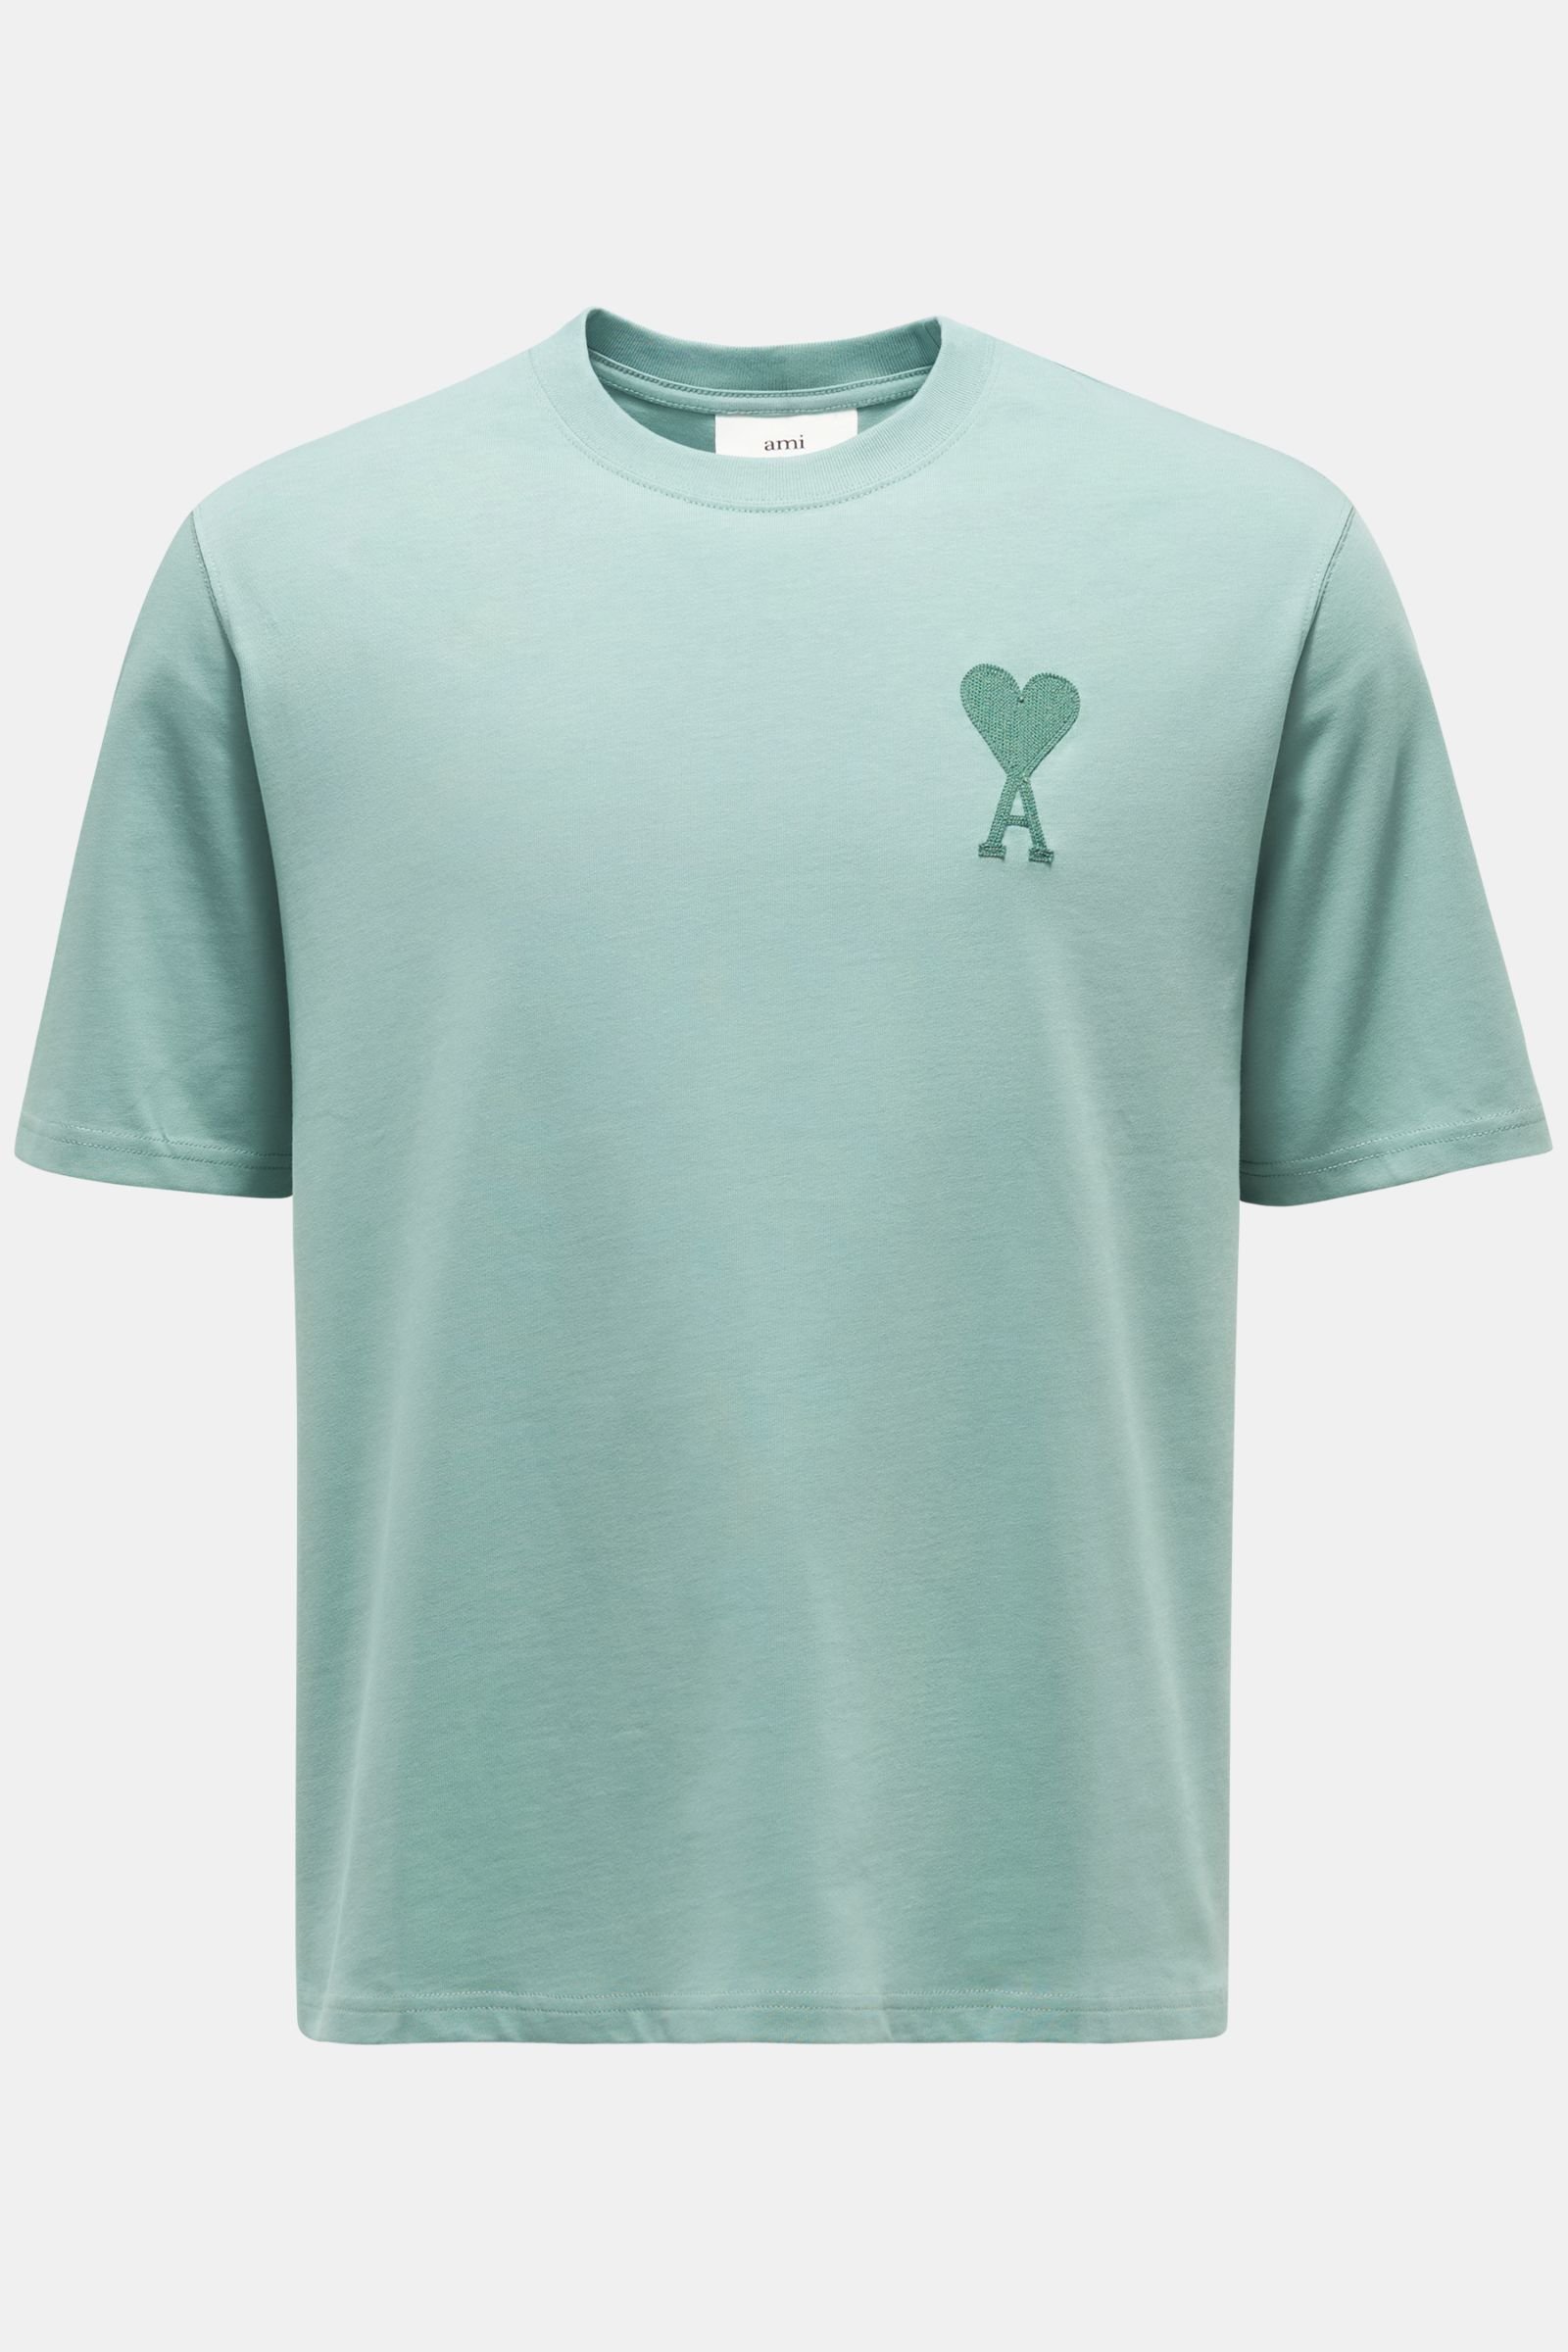 AMI PARIS Rundhals-T-Shirt mintgrün | BRAUN Hamburg